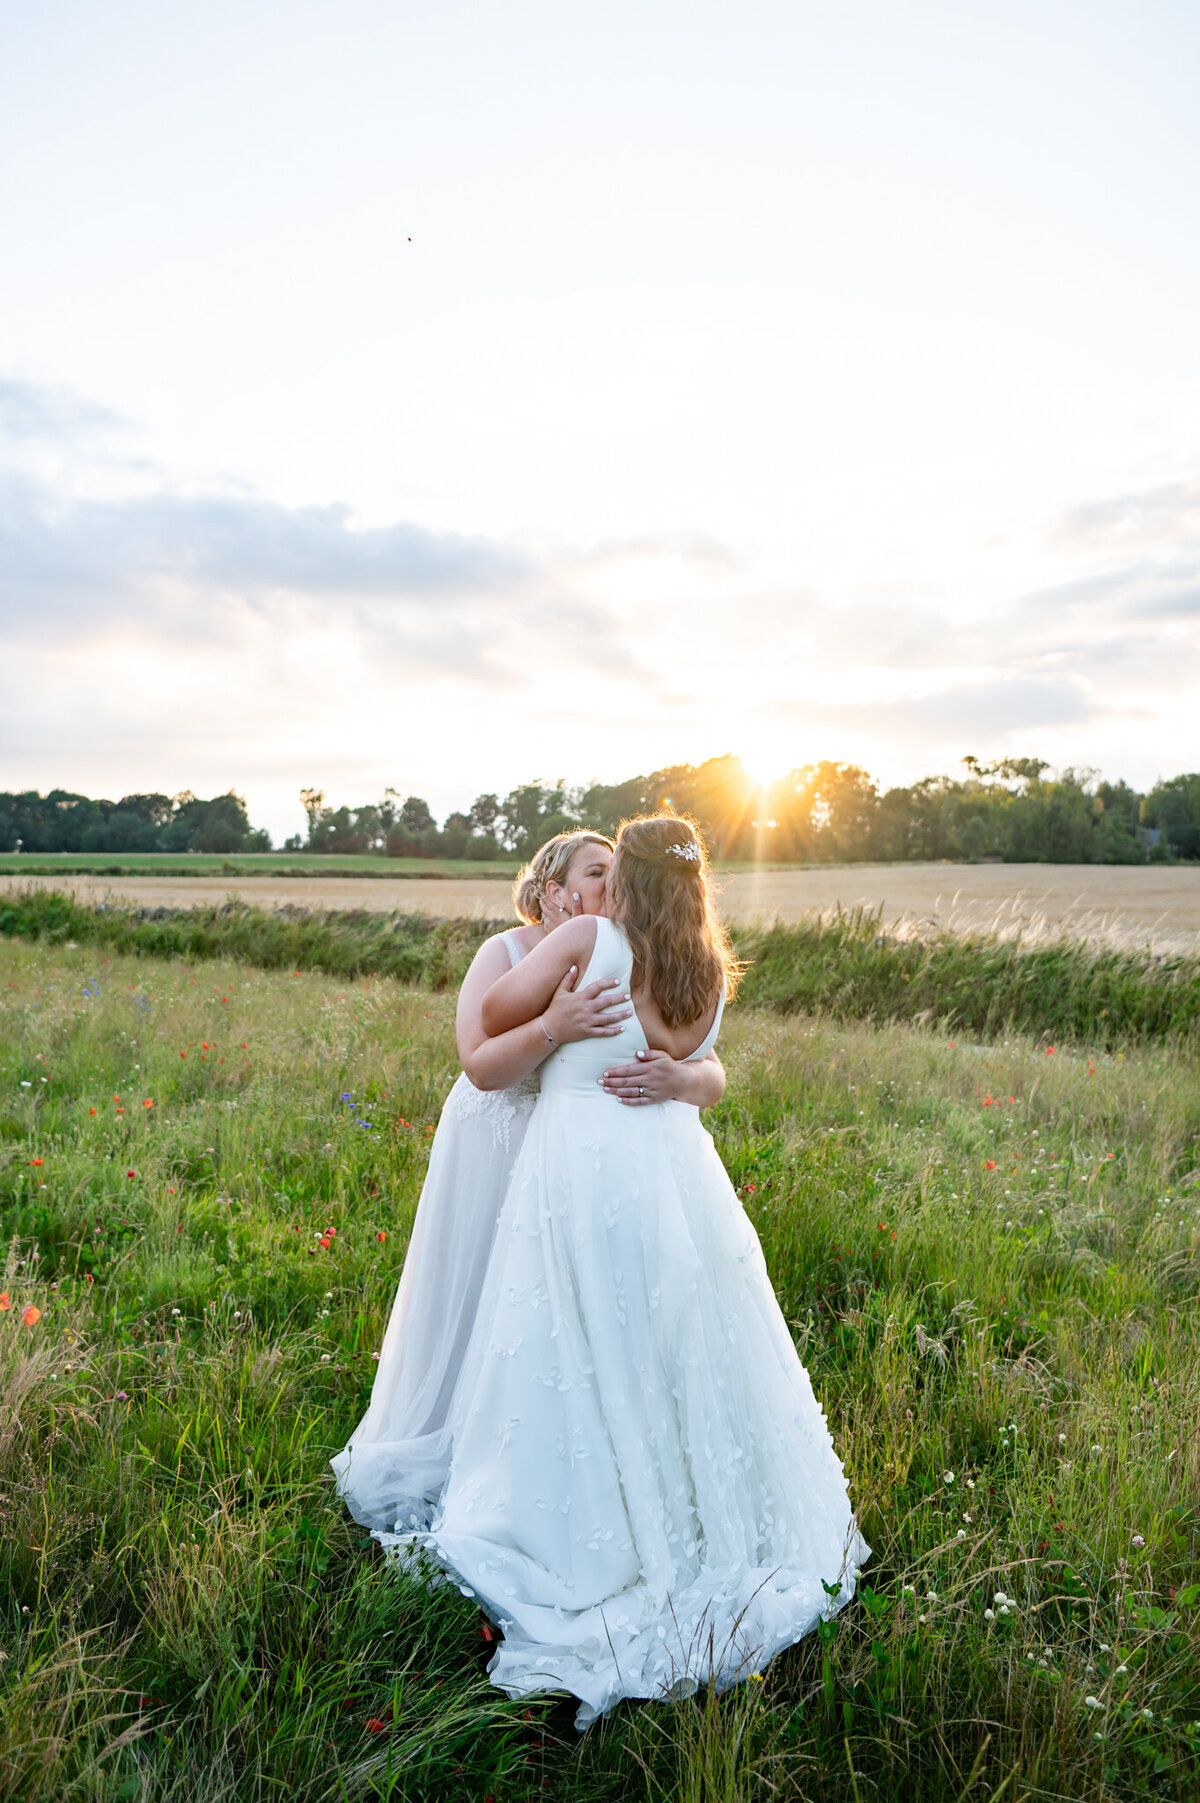 Lapstone Barn Cotswolds Wedding Photographer - Chloe Bolam - S&H - 27.07.23 -85